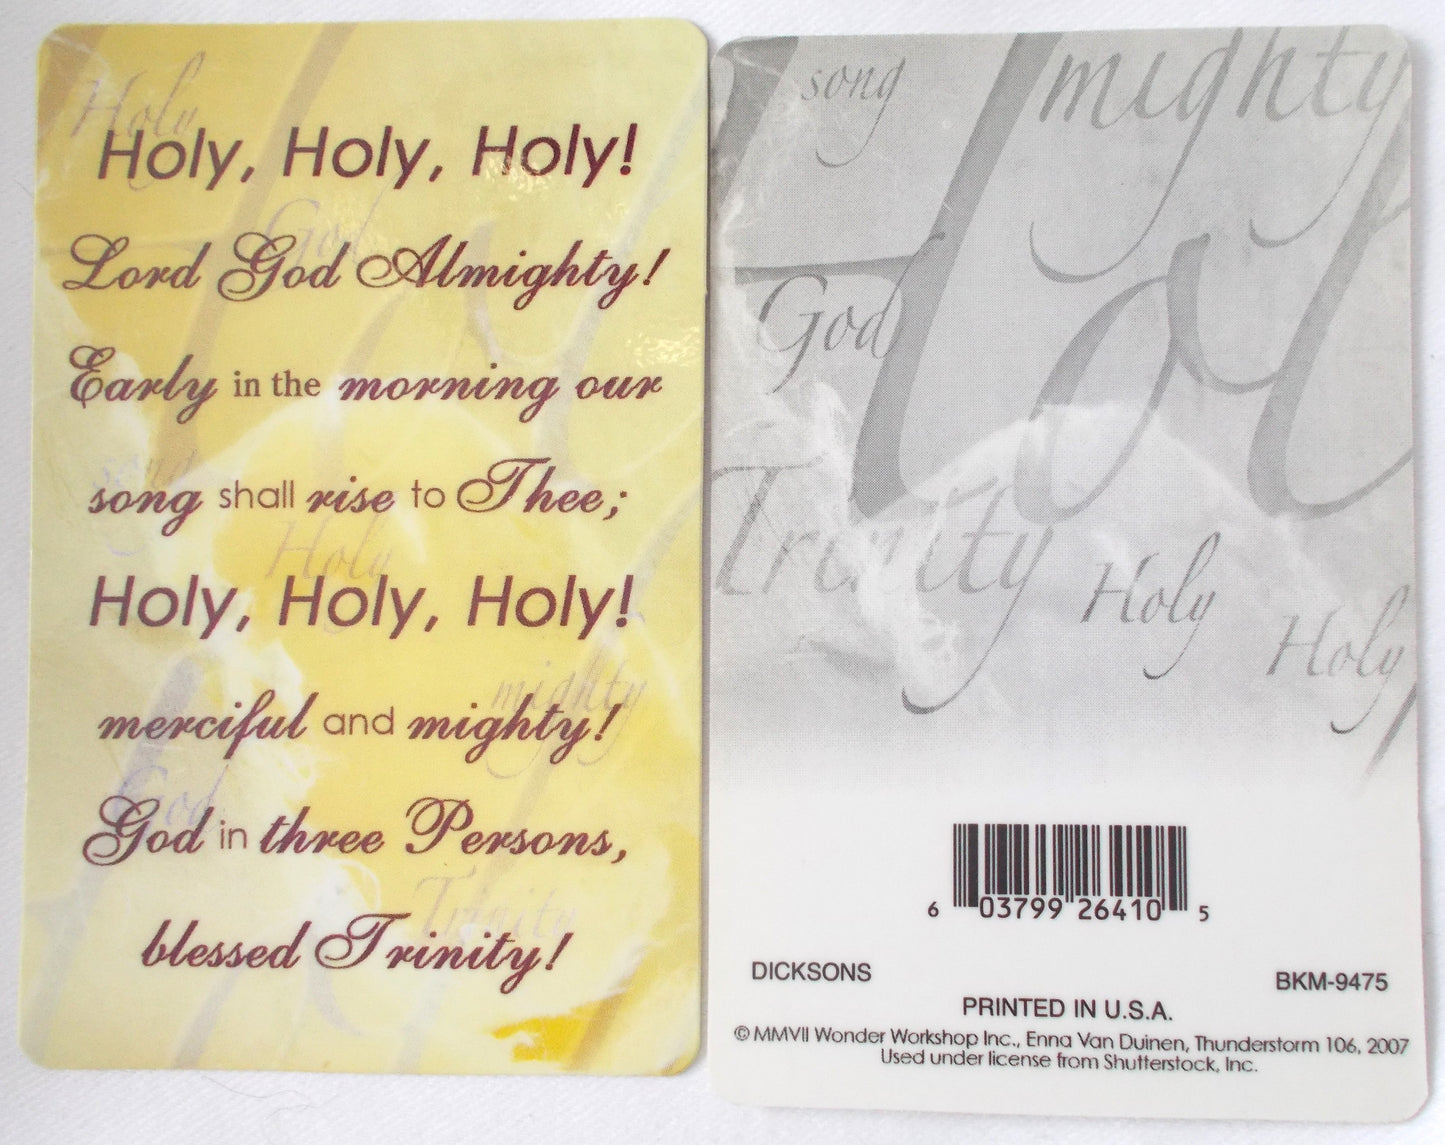 Holy, Holy, Holy! - Coated Cardstock Prayercard